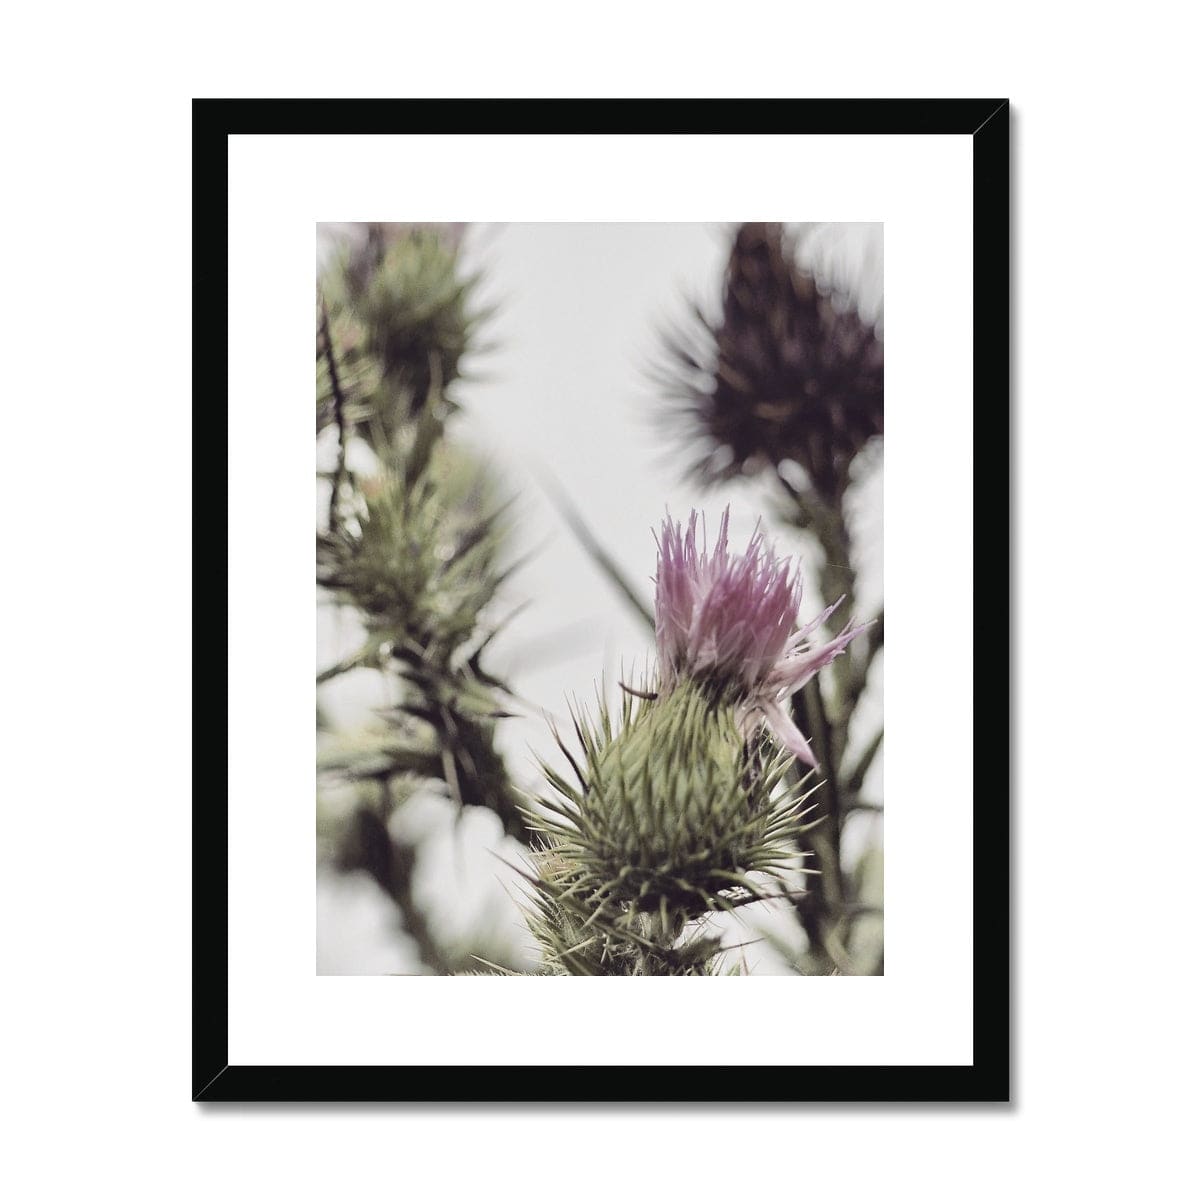 Adam Davies Framed A4 Portrait (21x29.7cm) / Black Frame Botanical Pink Thistle Flower Framed & Mounted Print